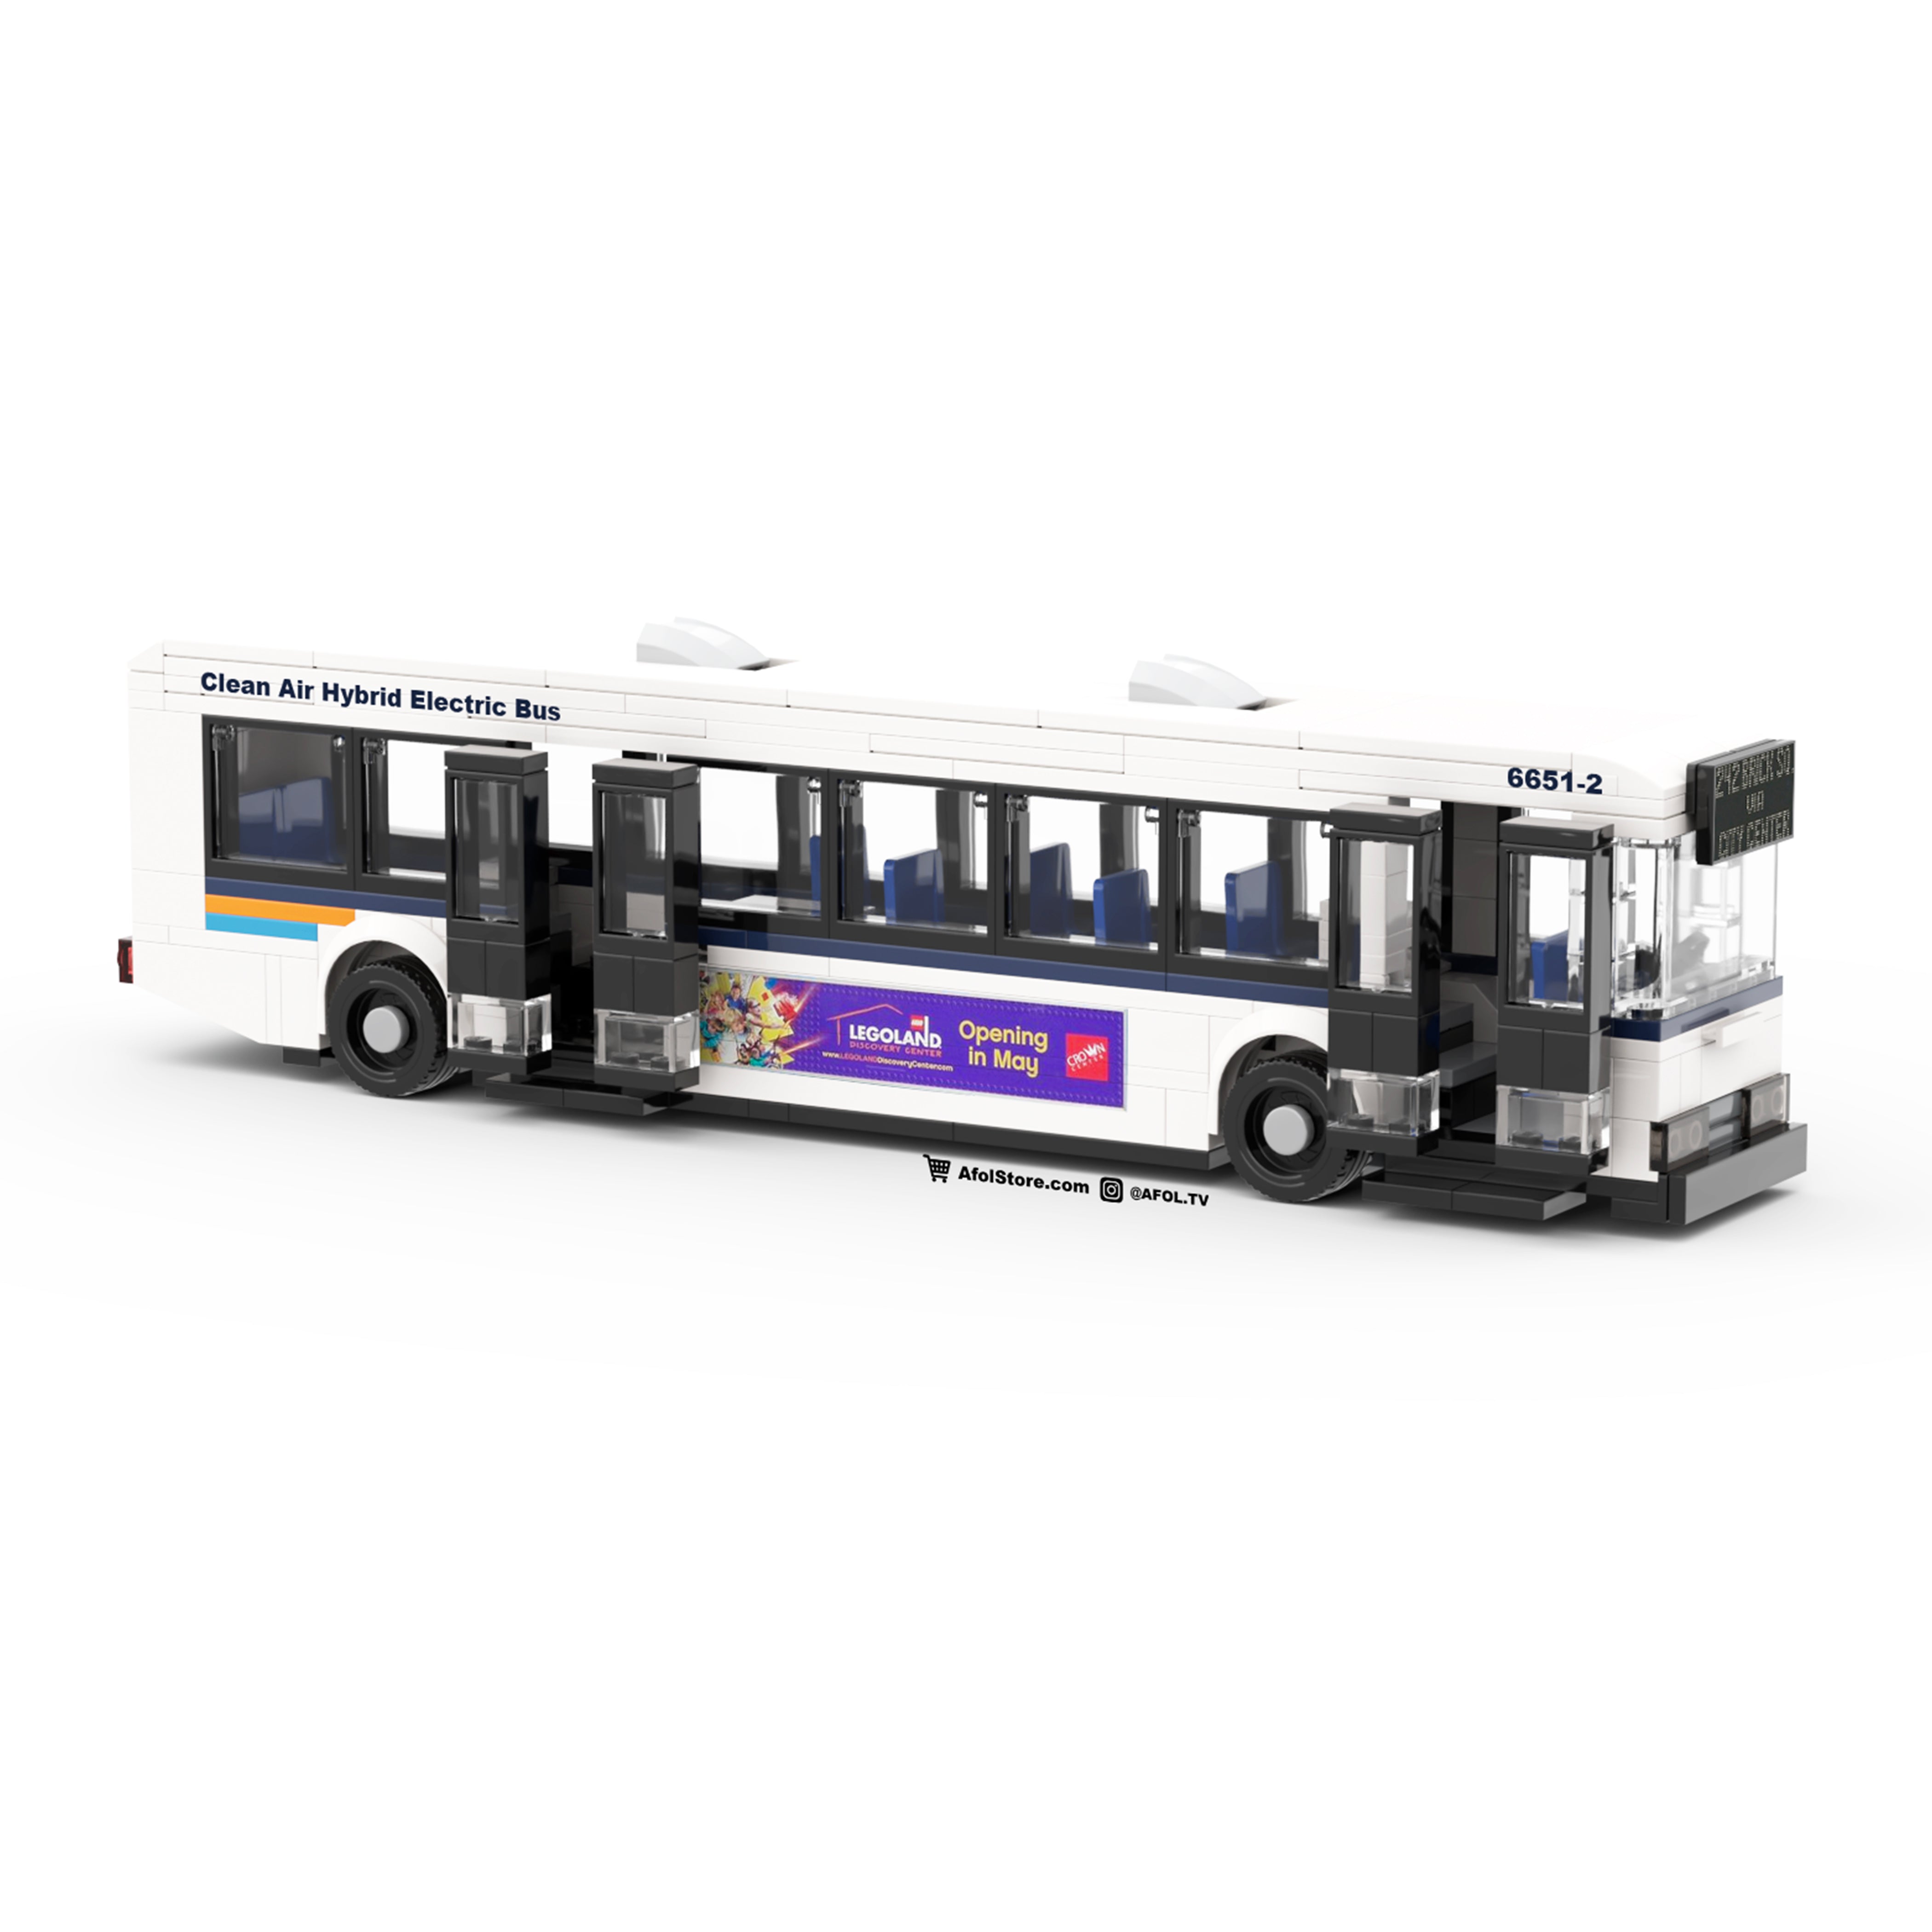 City Classic Bus (6-Wide) Instructions – AFOL TV